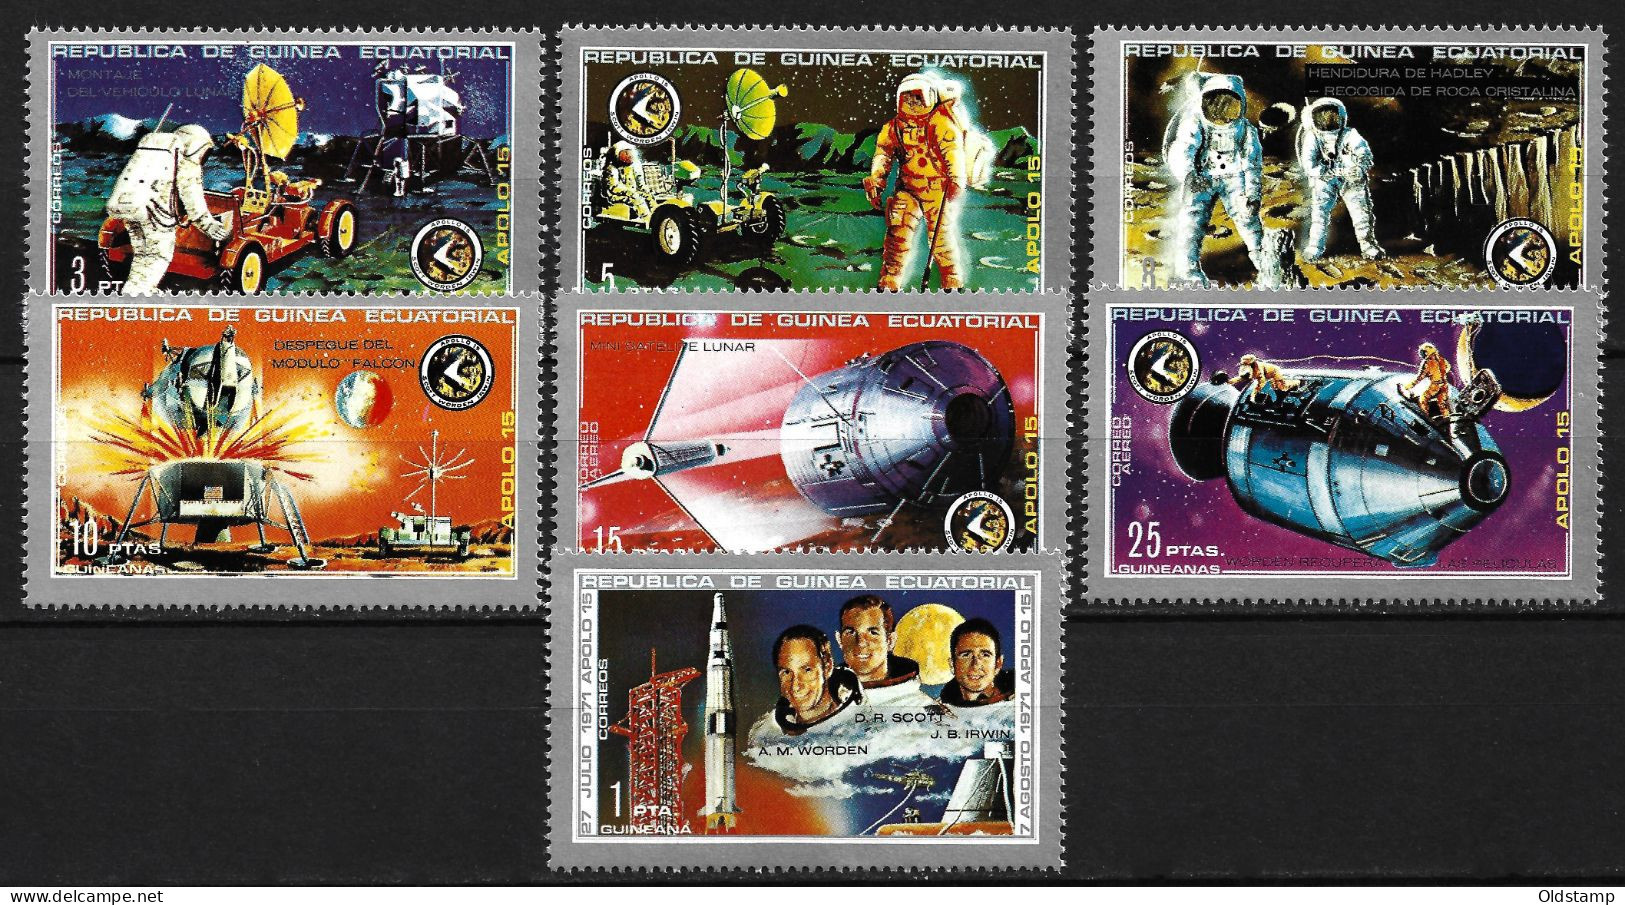 SPACE GUINEA 1972 MNH Full Set Mi. 18 - 24 APOLLO SHIP ASTRONAUTS Stamps Guinée équatoriale Guinea - Collezioni